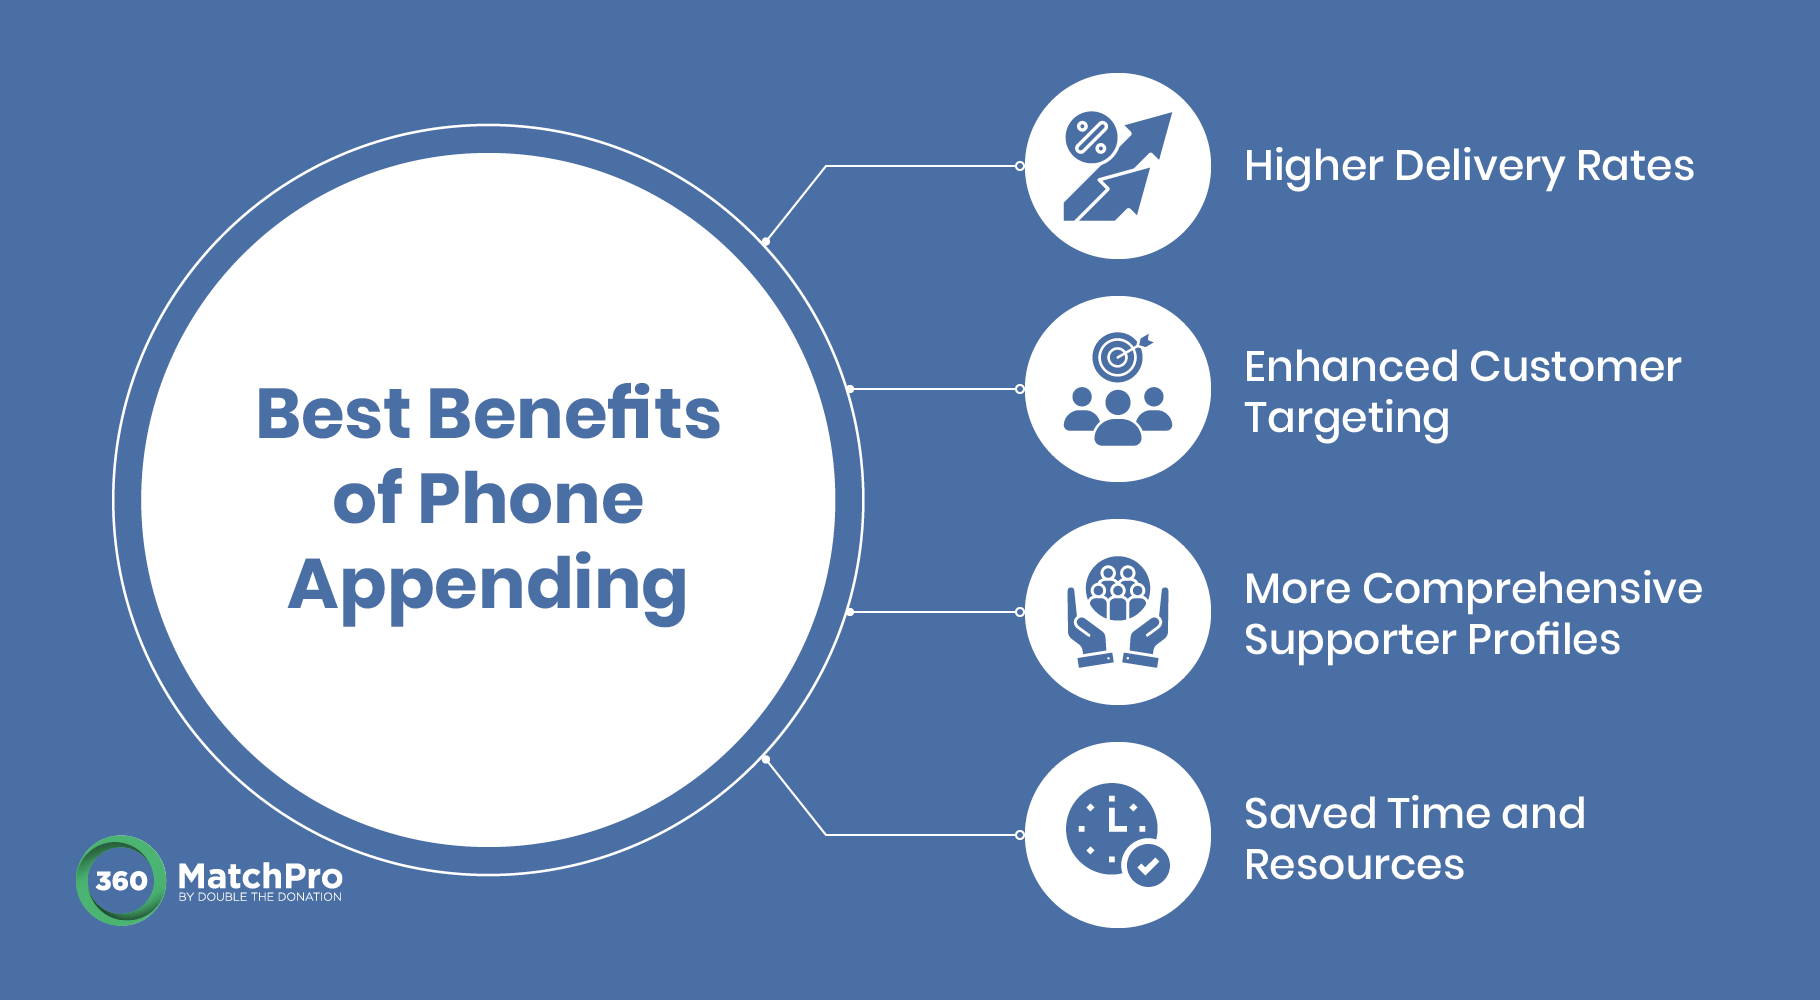 The benefits of phone appends, written below